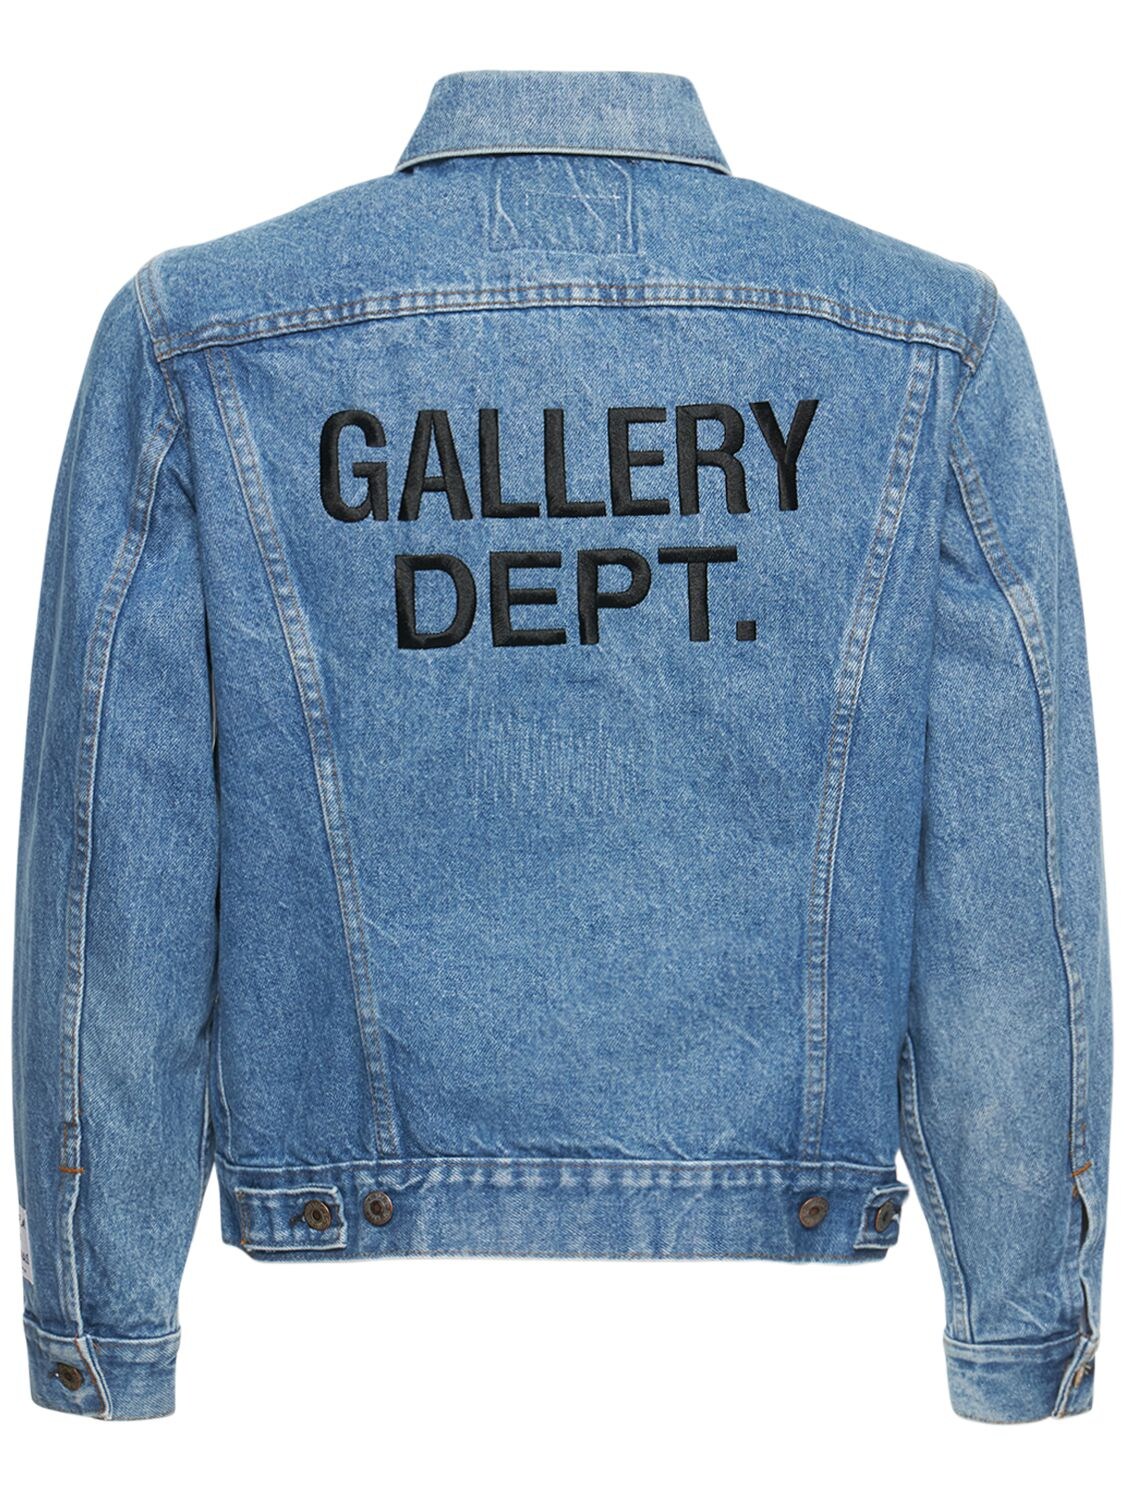 GALLERY DEPT. mechanic-style jacket | Smart Closet